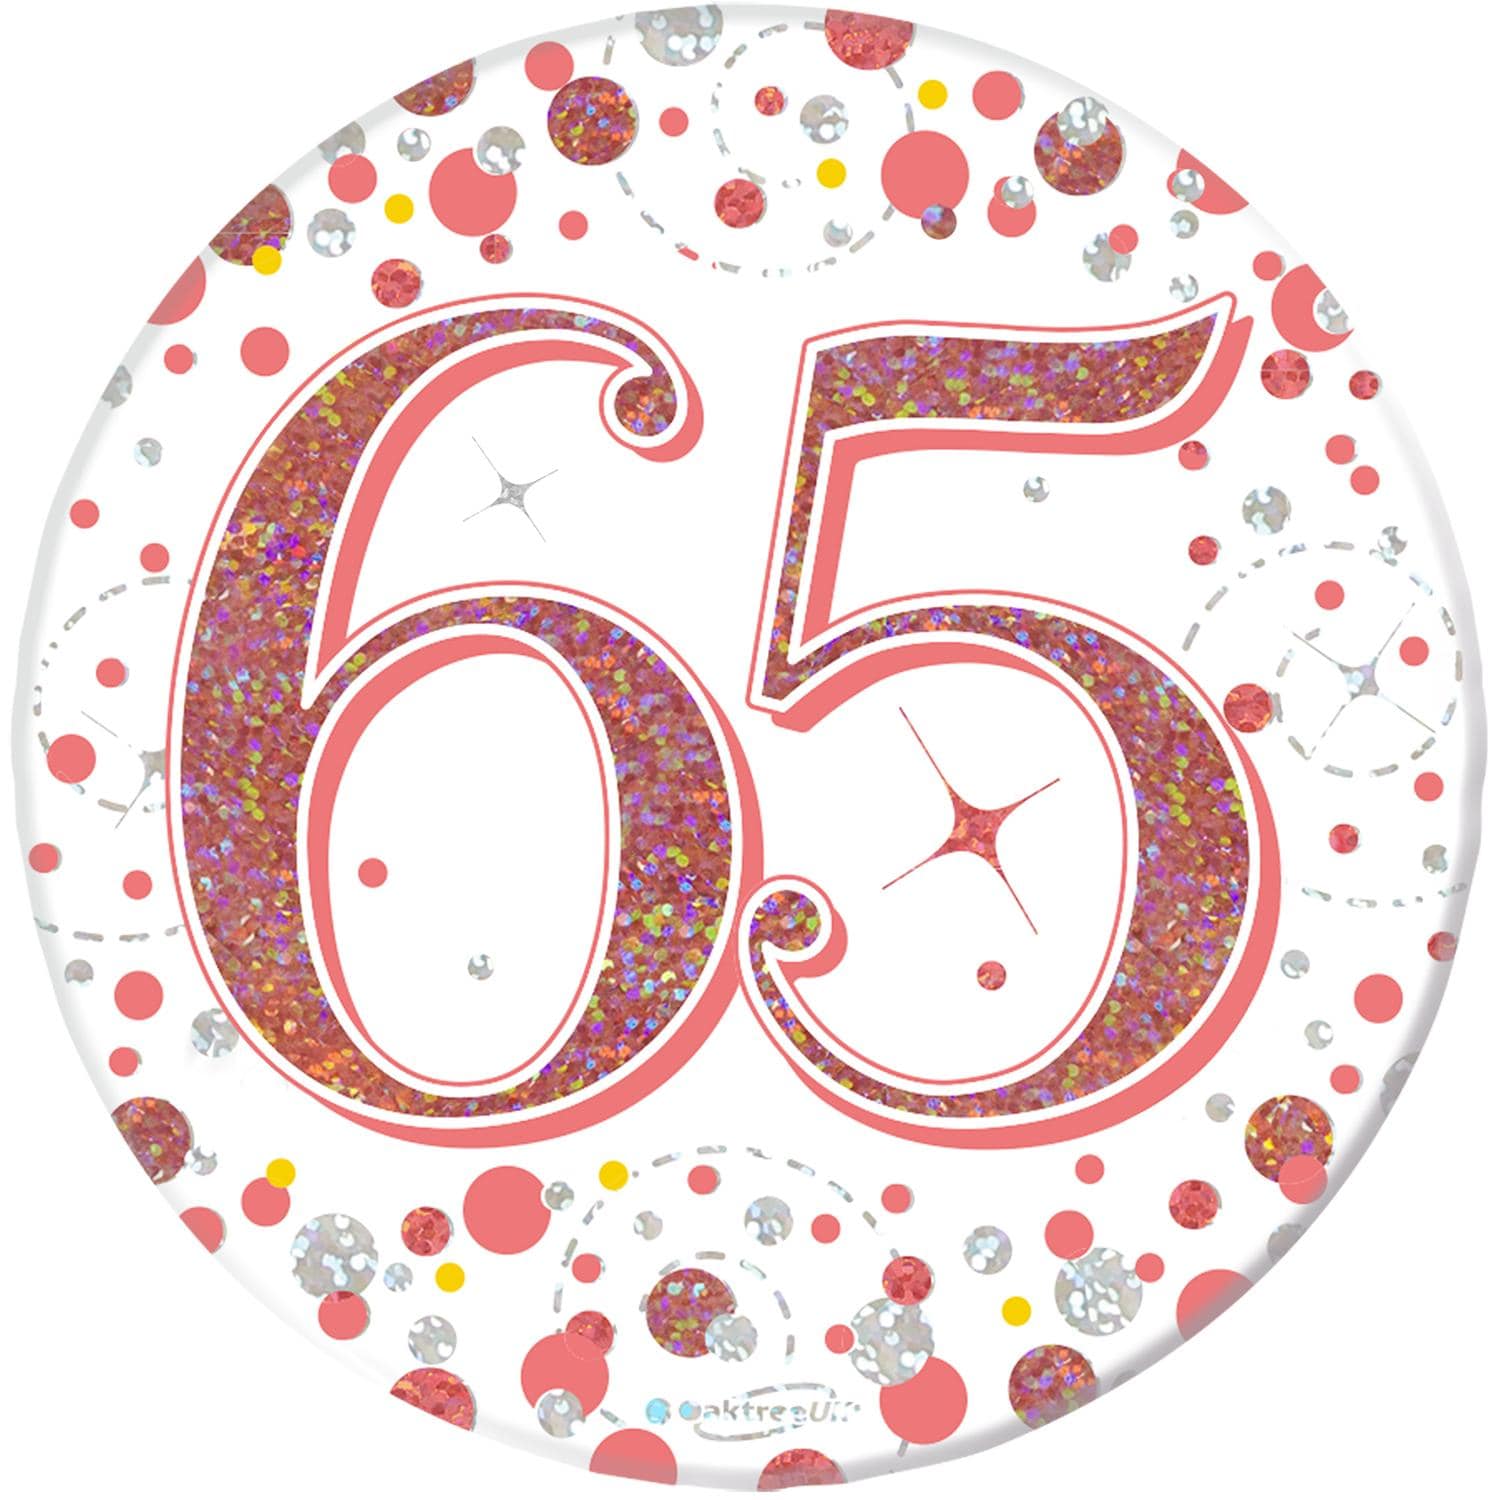 65th Birthday Sparkling Rose Gold Fizz Badge